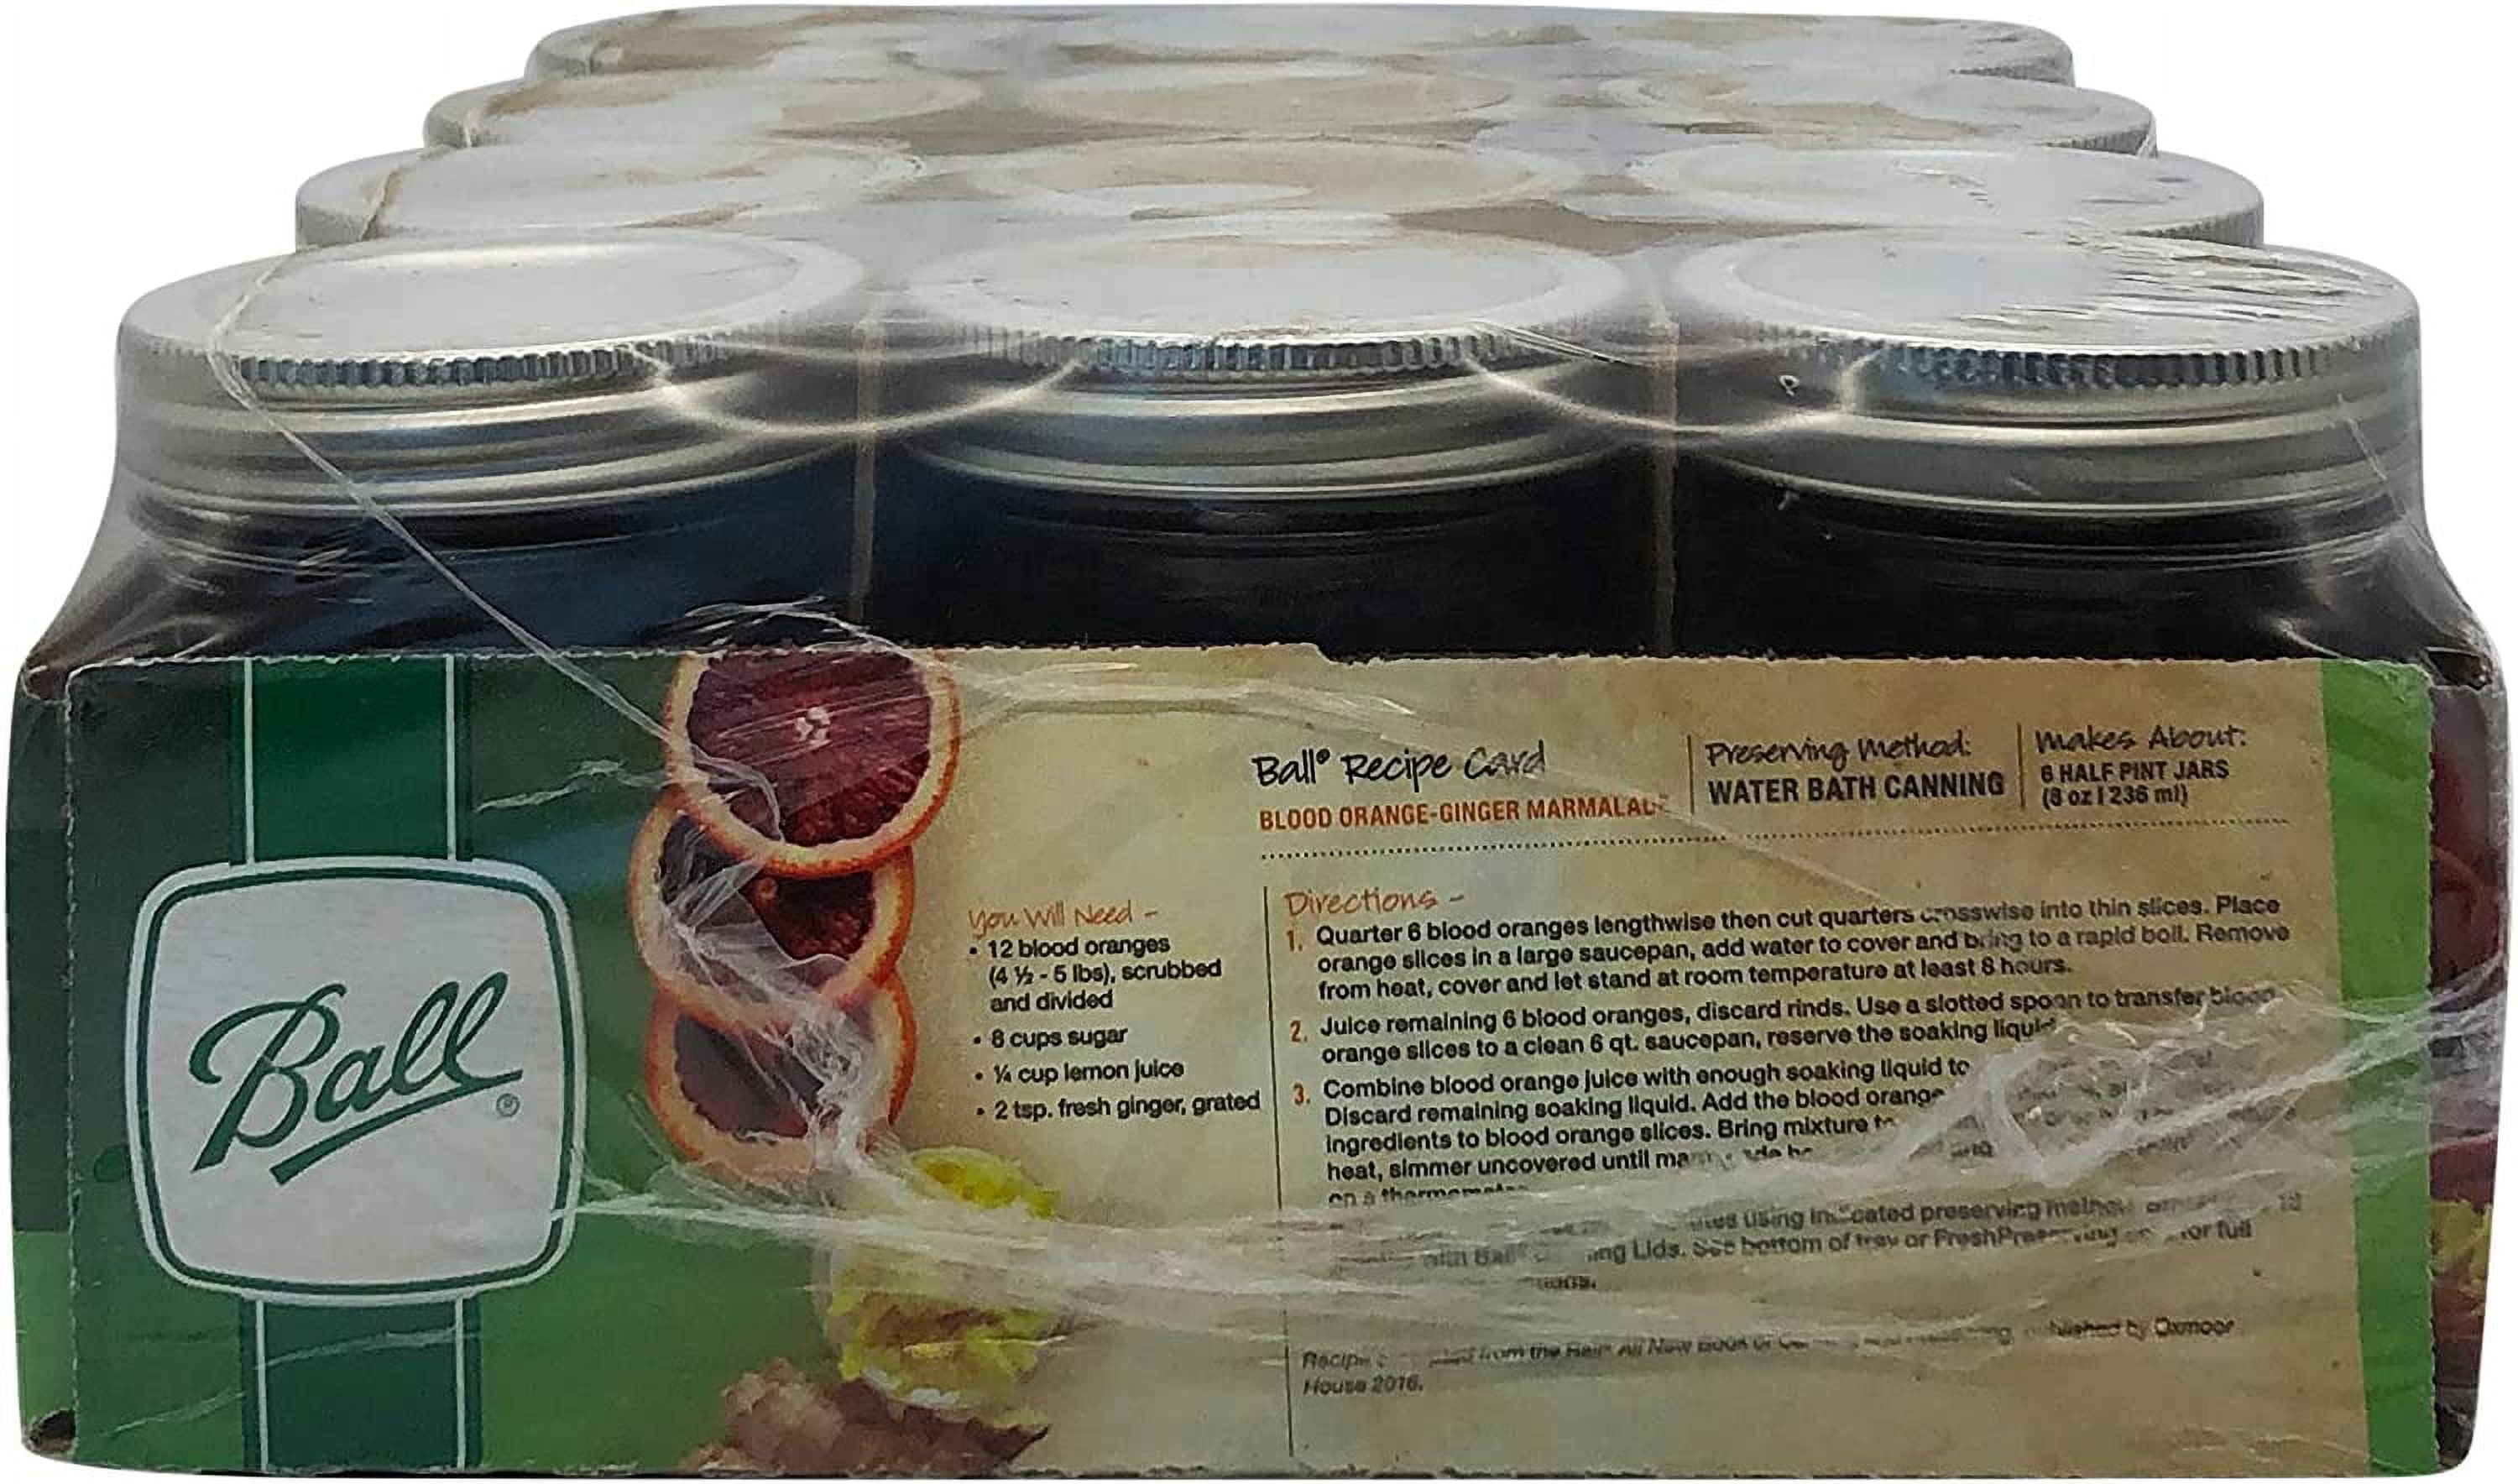  Regular Mouth Mason Jars 8 oz [12Pack] Jelly Jars with Lids 8 oz.  For Canning, Fermenting, Conserving Syrups, Sauces, Jams, Baby Foods -  Microwave/Freeze/Dishwasher Safe + SEWANTA Jar Opener: Home 